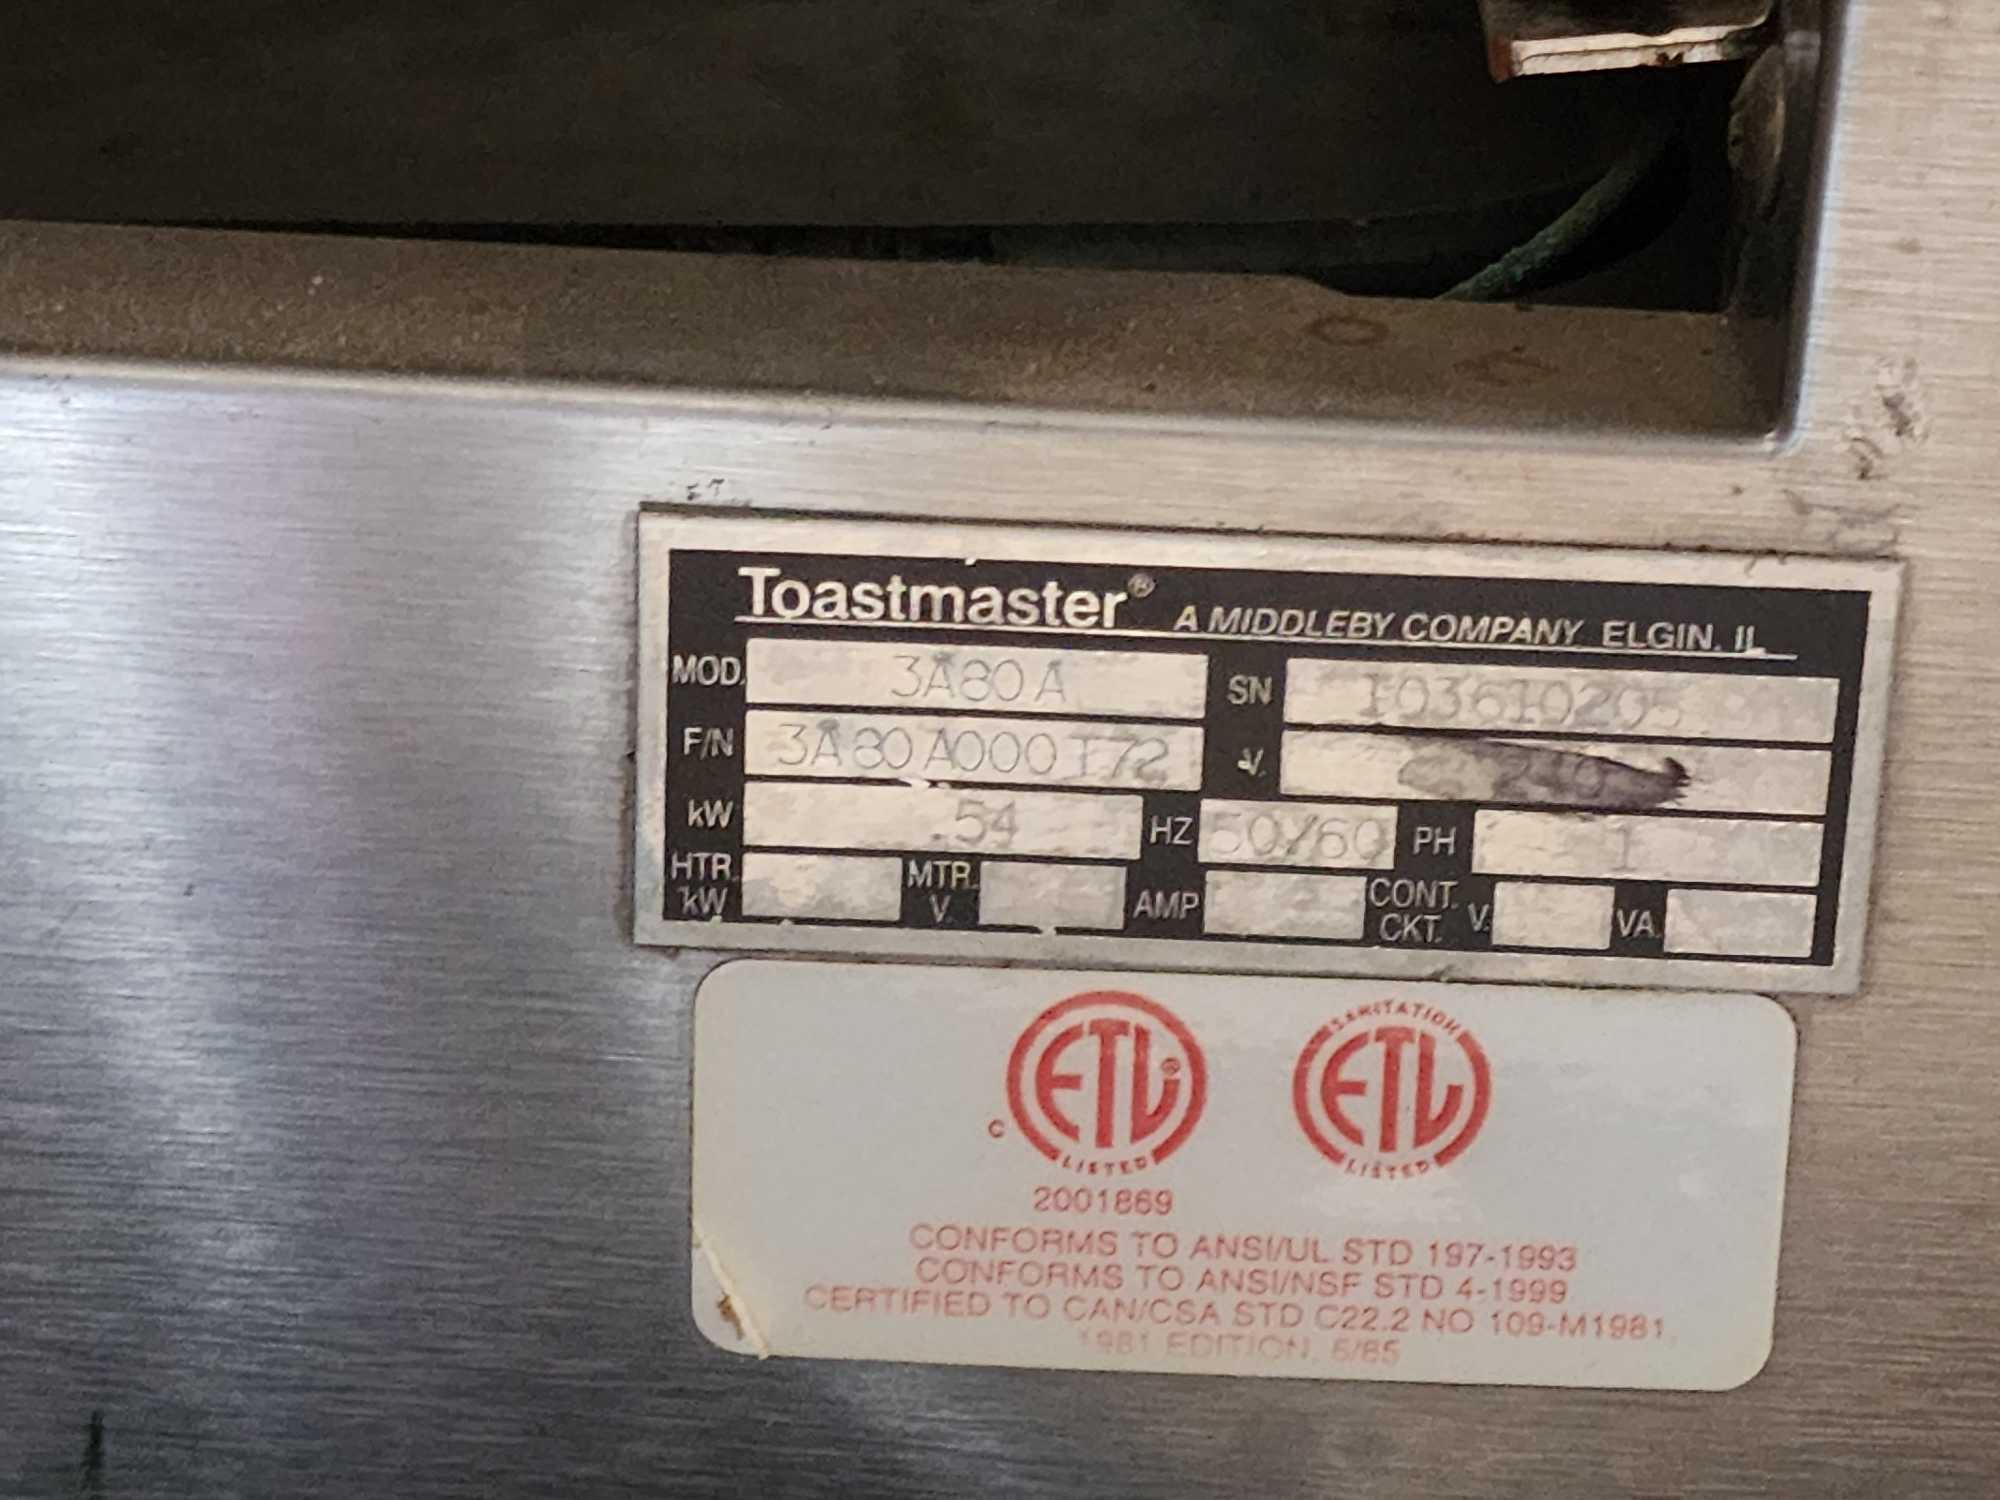 S/Steel Toastmaster Food Warmer with S/Steel Roll Around Storage cart